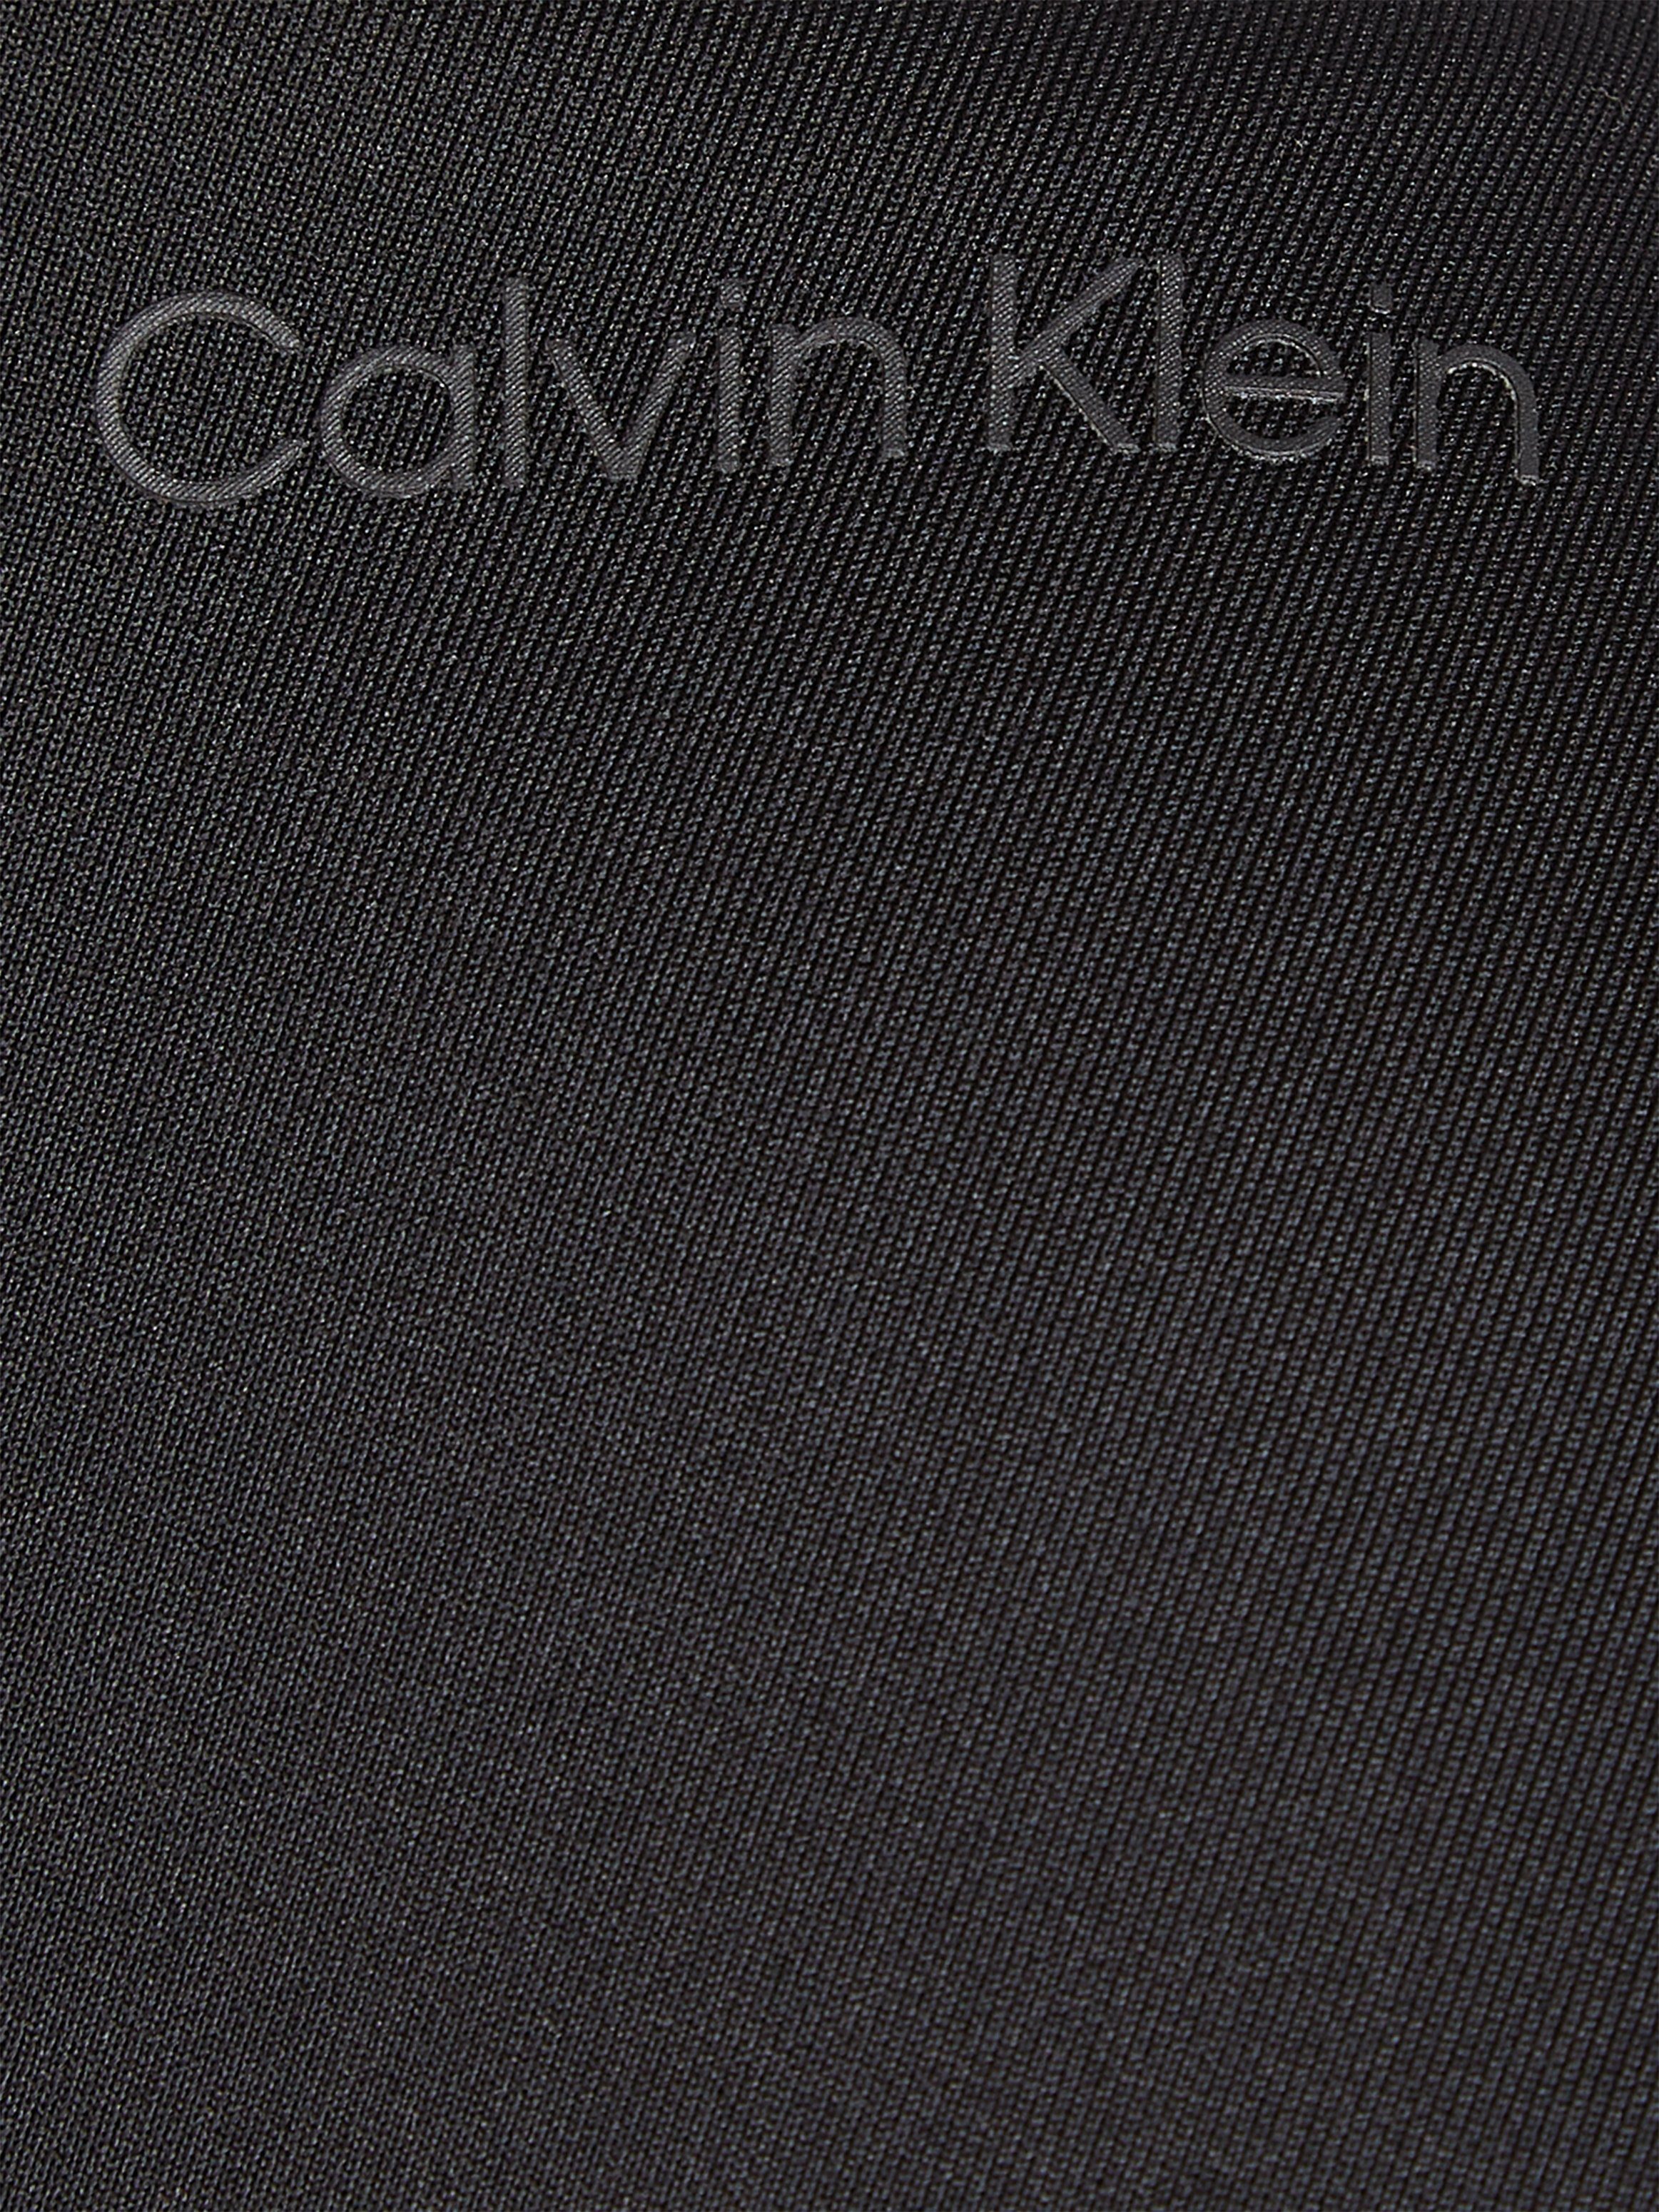 Calvin MINI TECHNICAL Klein TANK DRESS Etuikleid KNIT